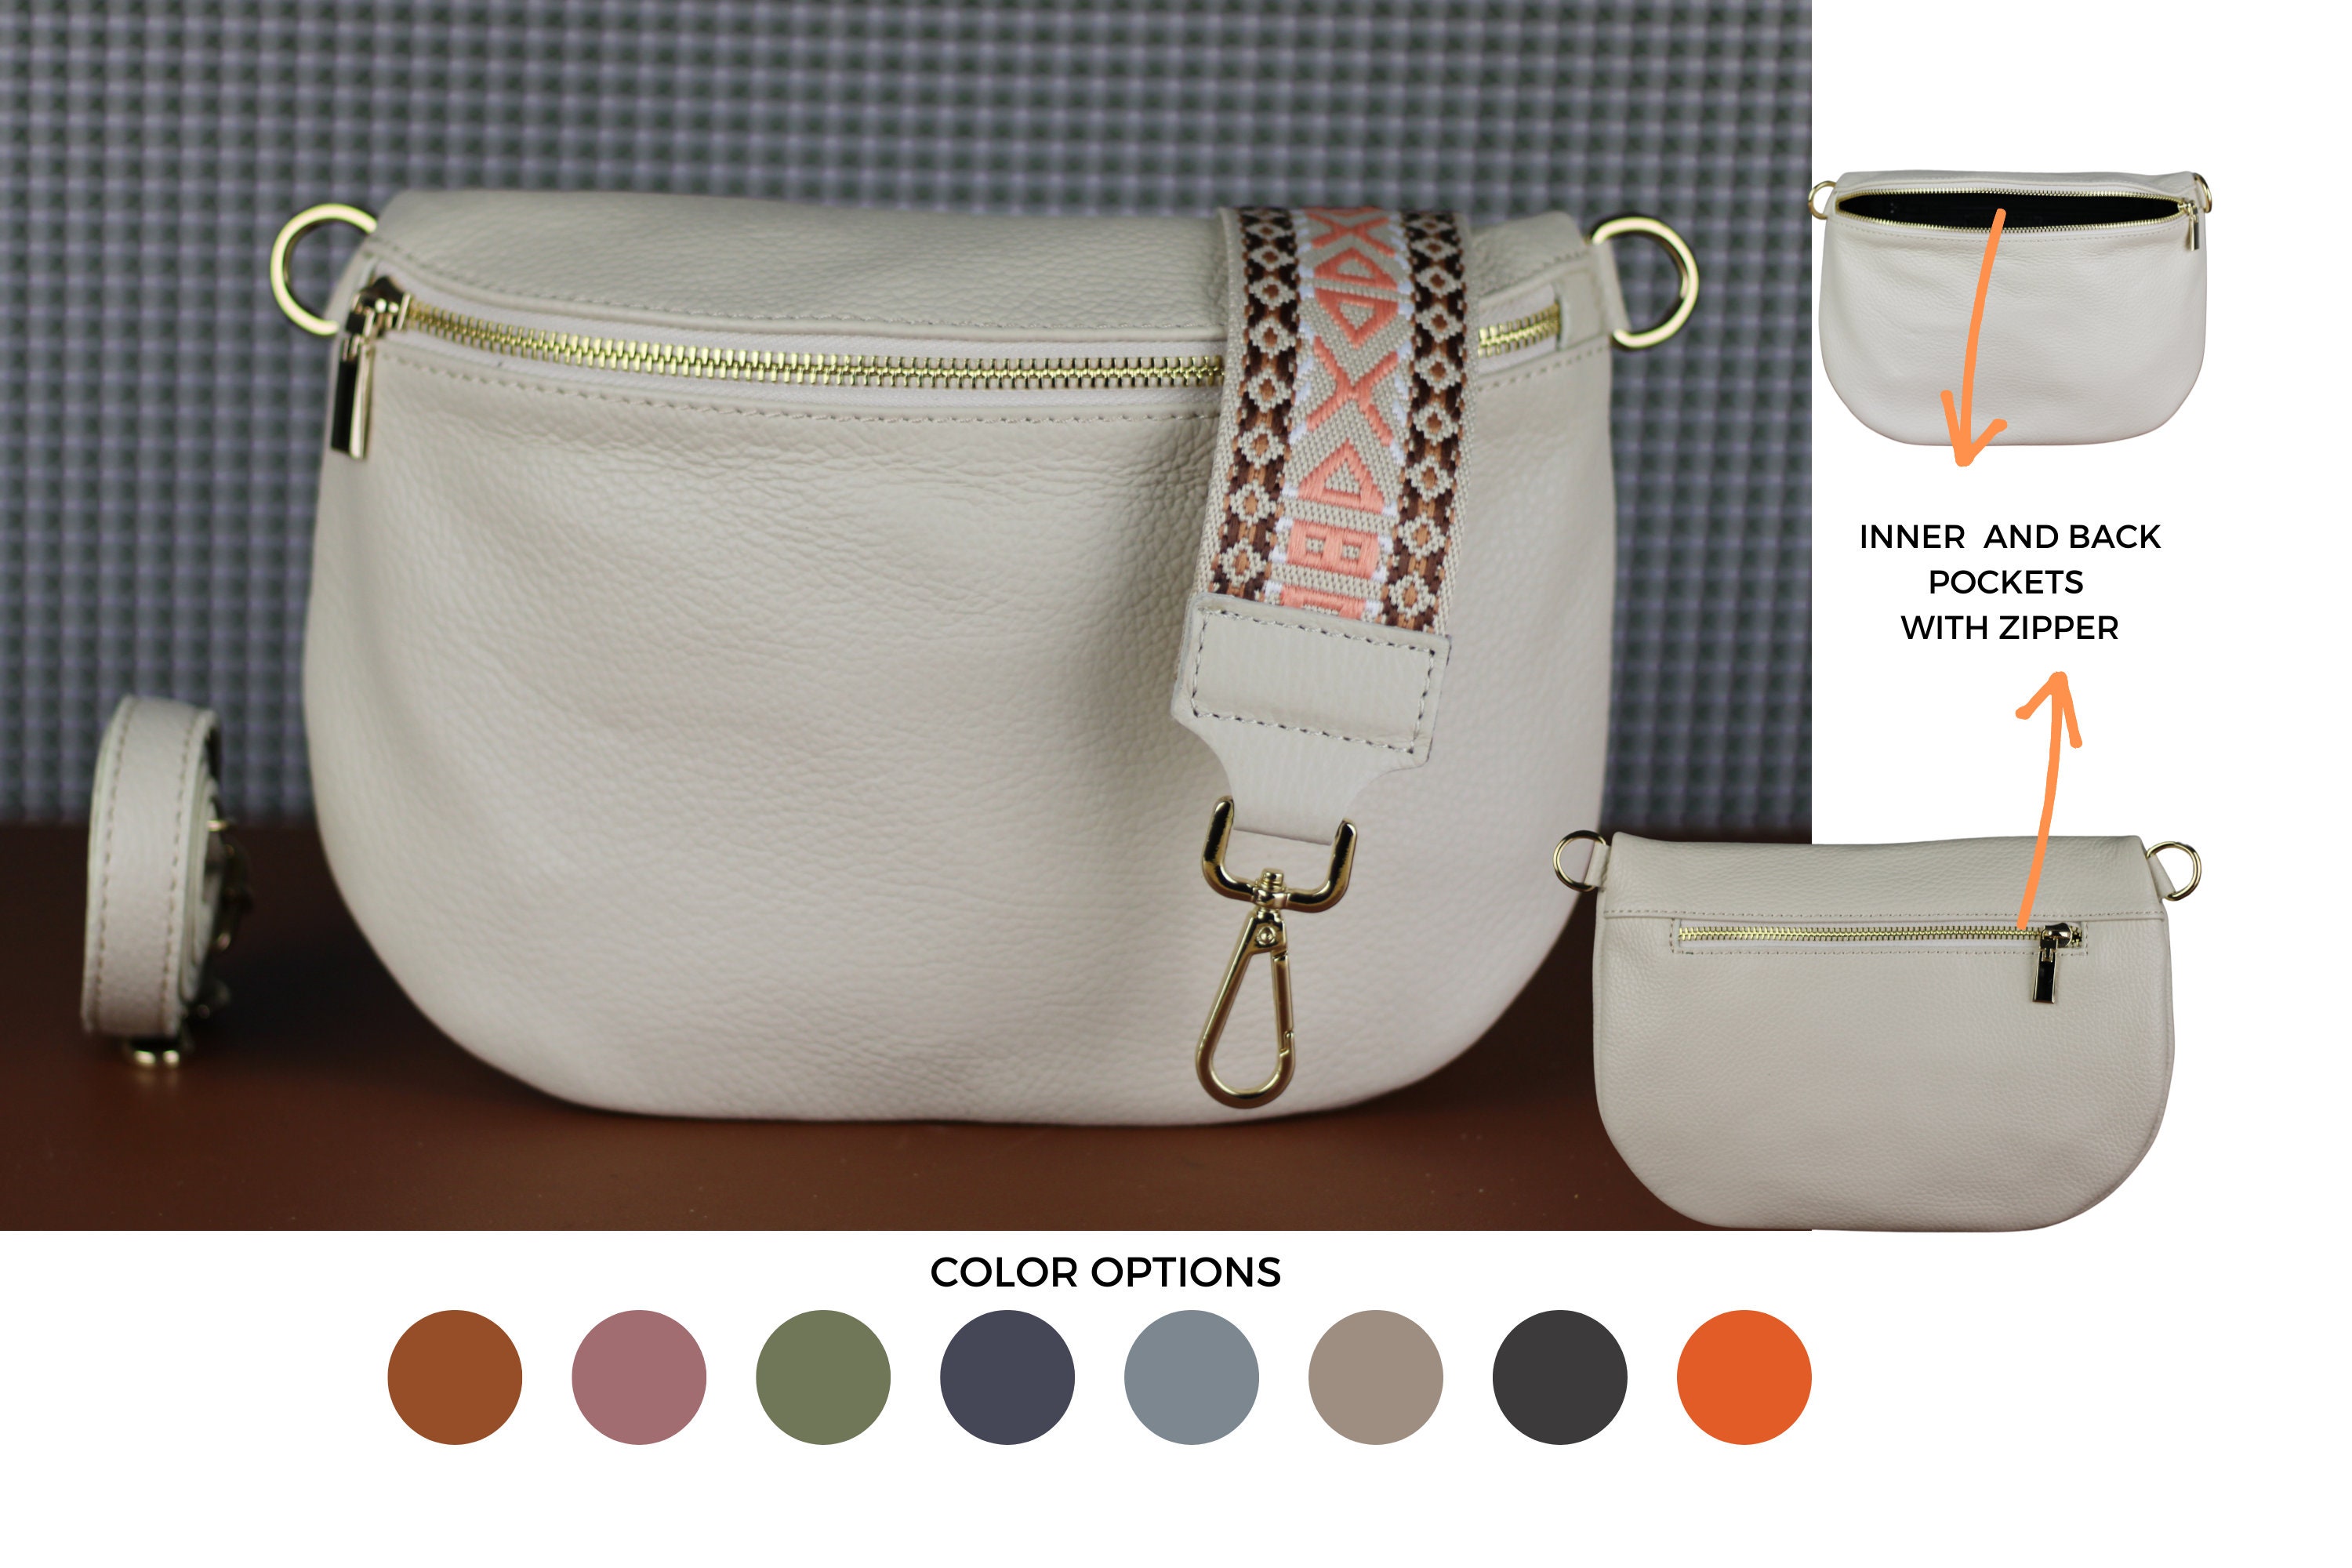  Monika Seller 6 Pocket Foldable Hanging Purse Handbag